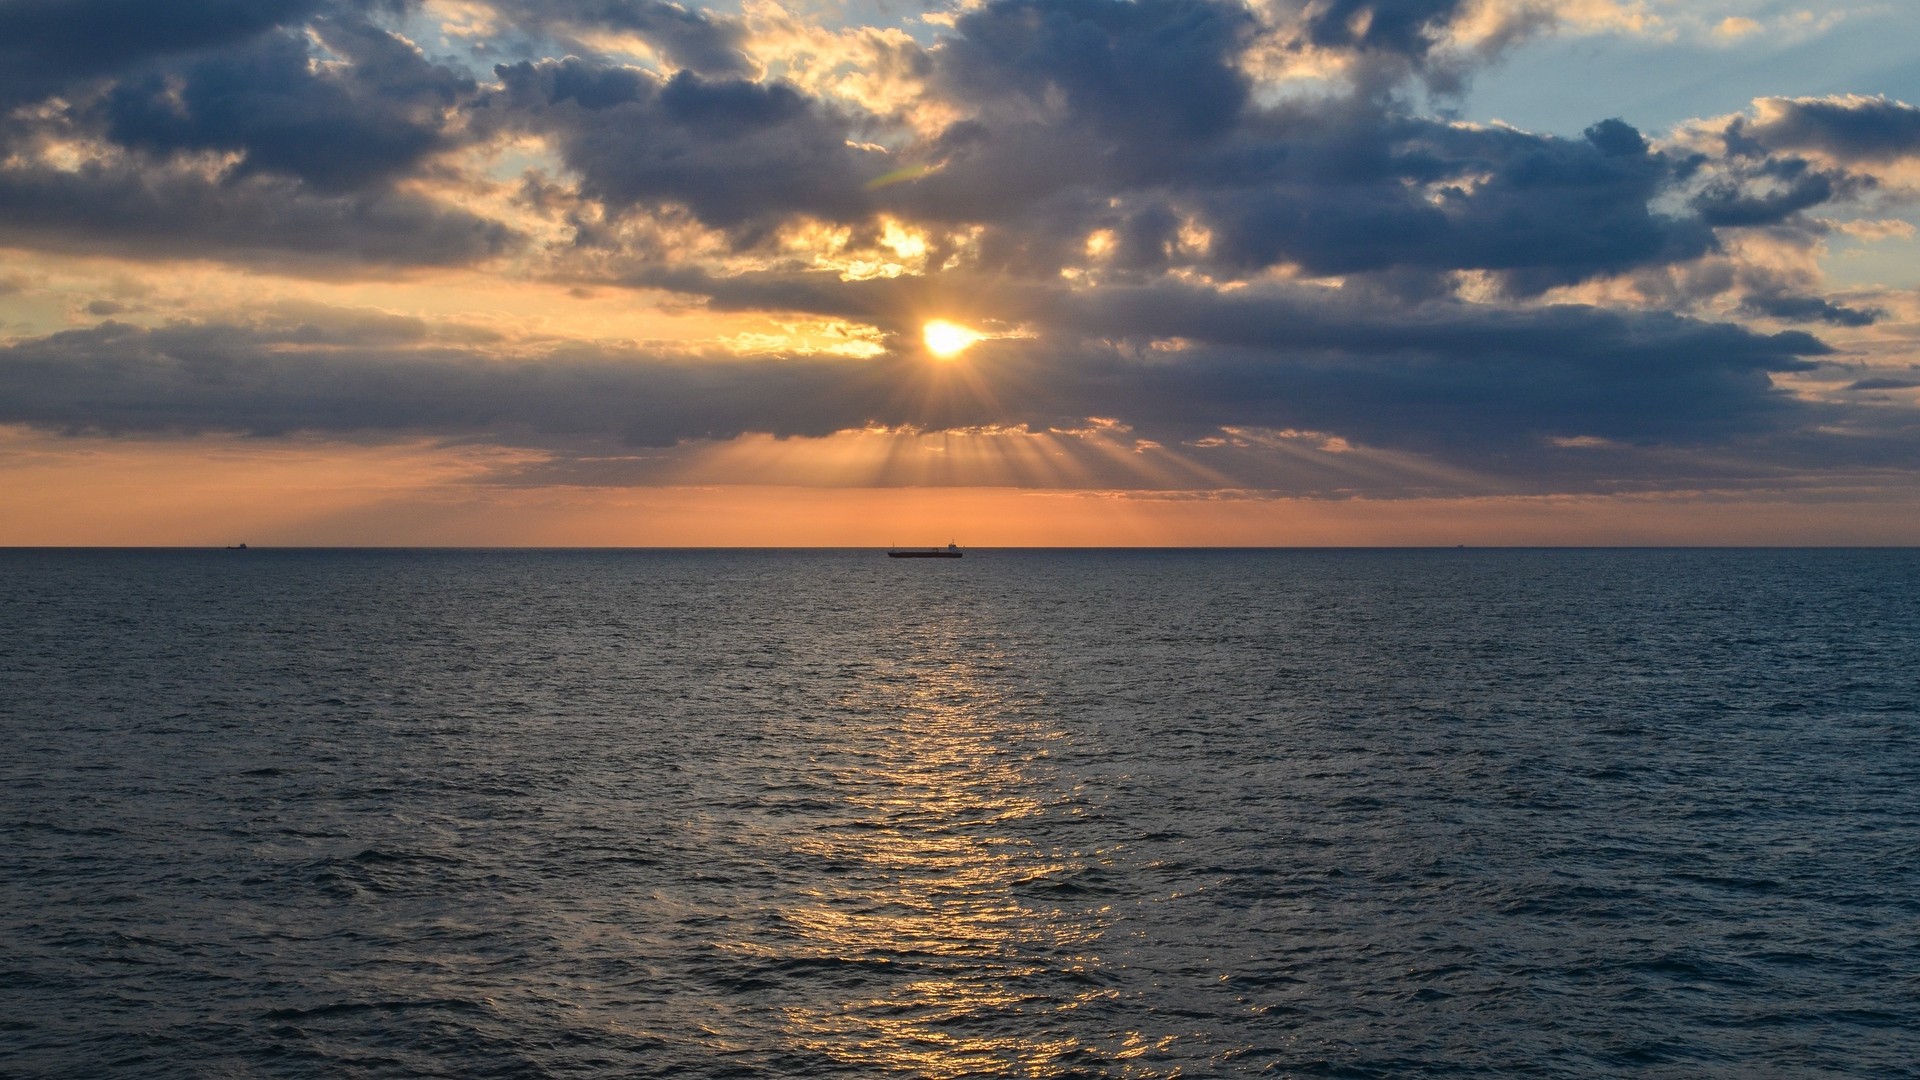 1920x1080 wallpapers: sea, horizon, sunset, ripples, ship (image)